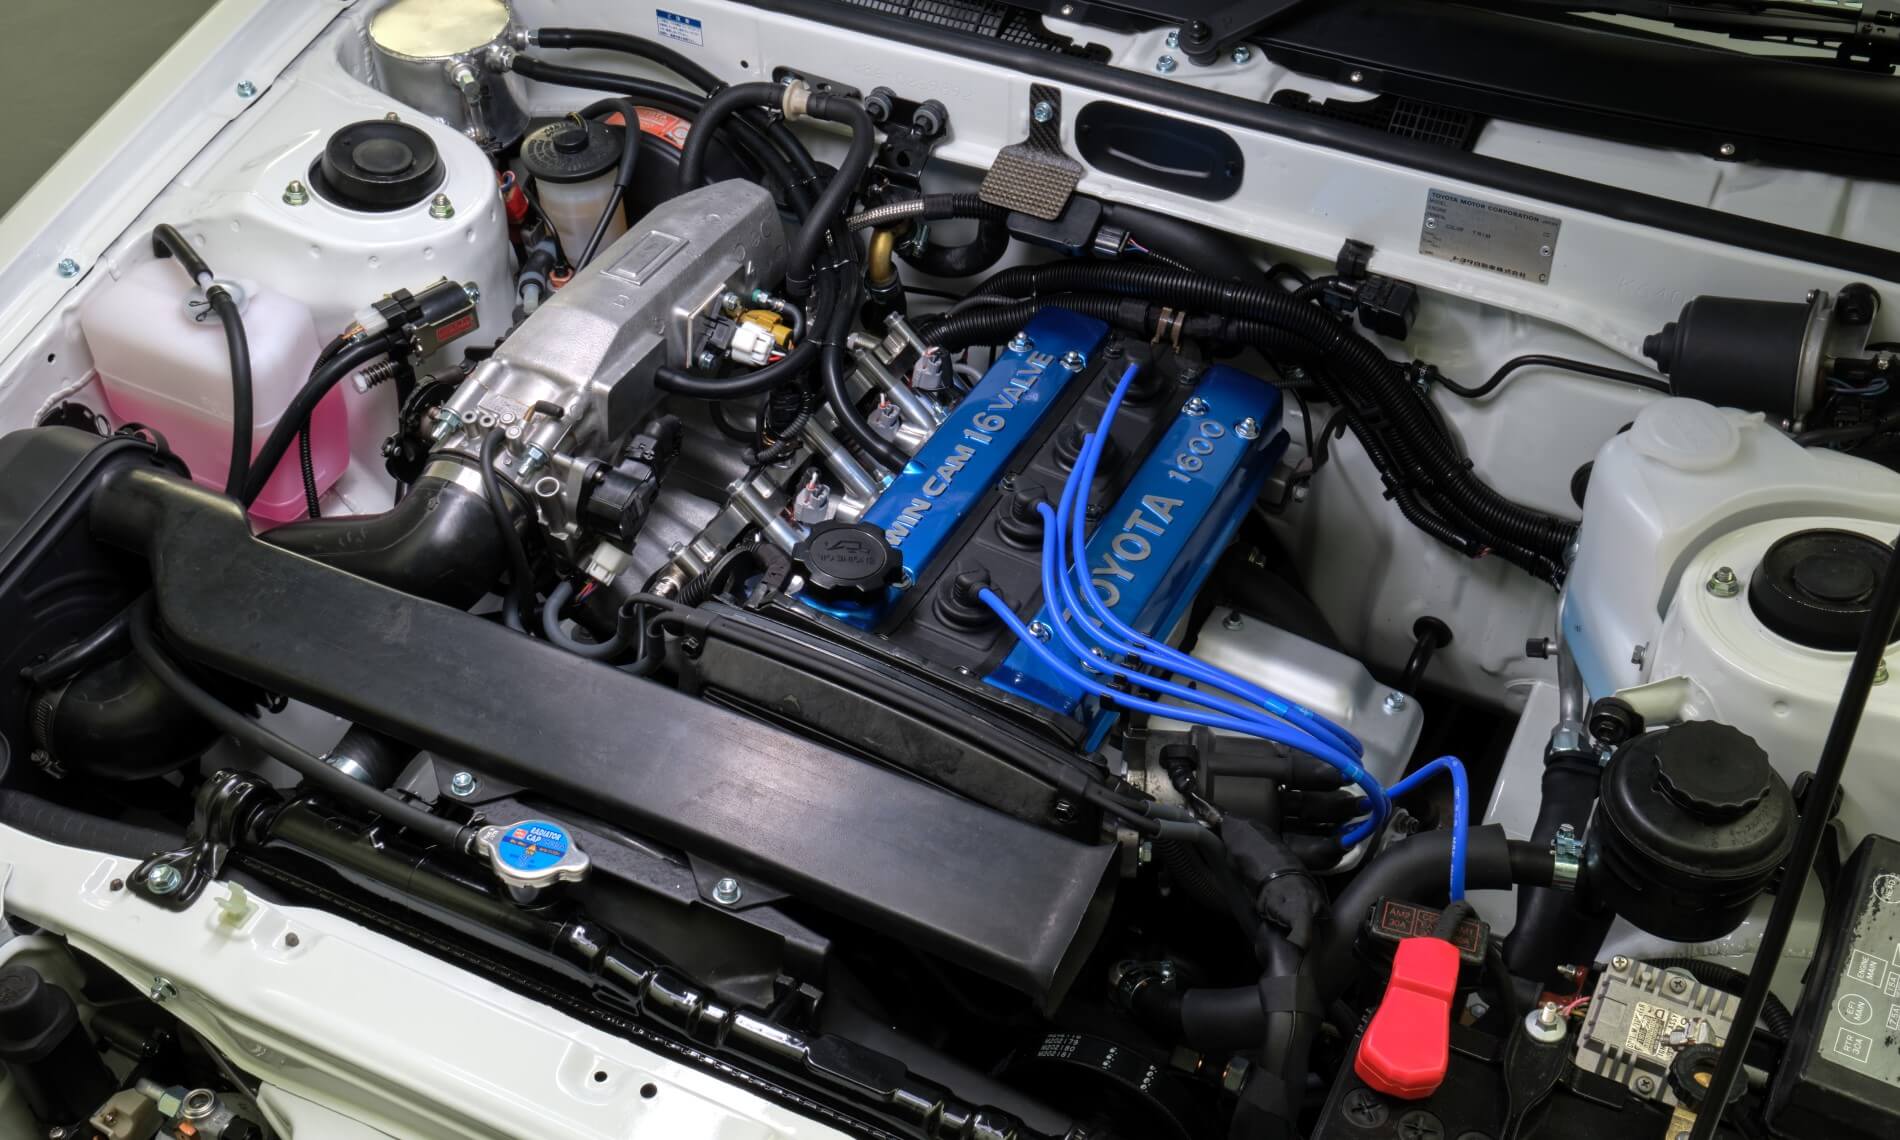 Toyota AE86s with hydrogen powertrain